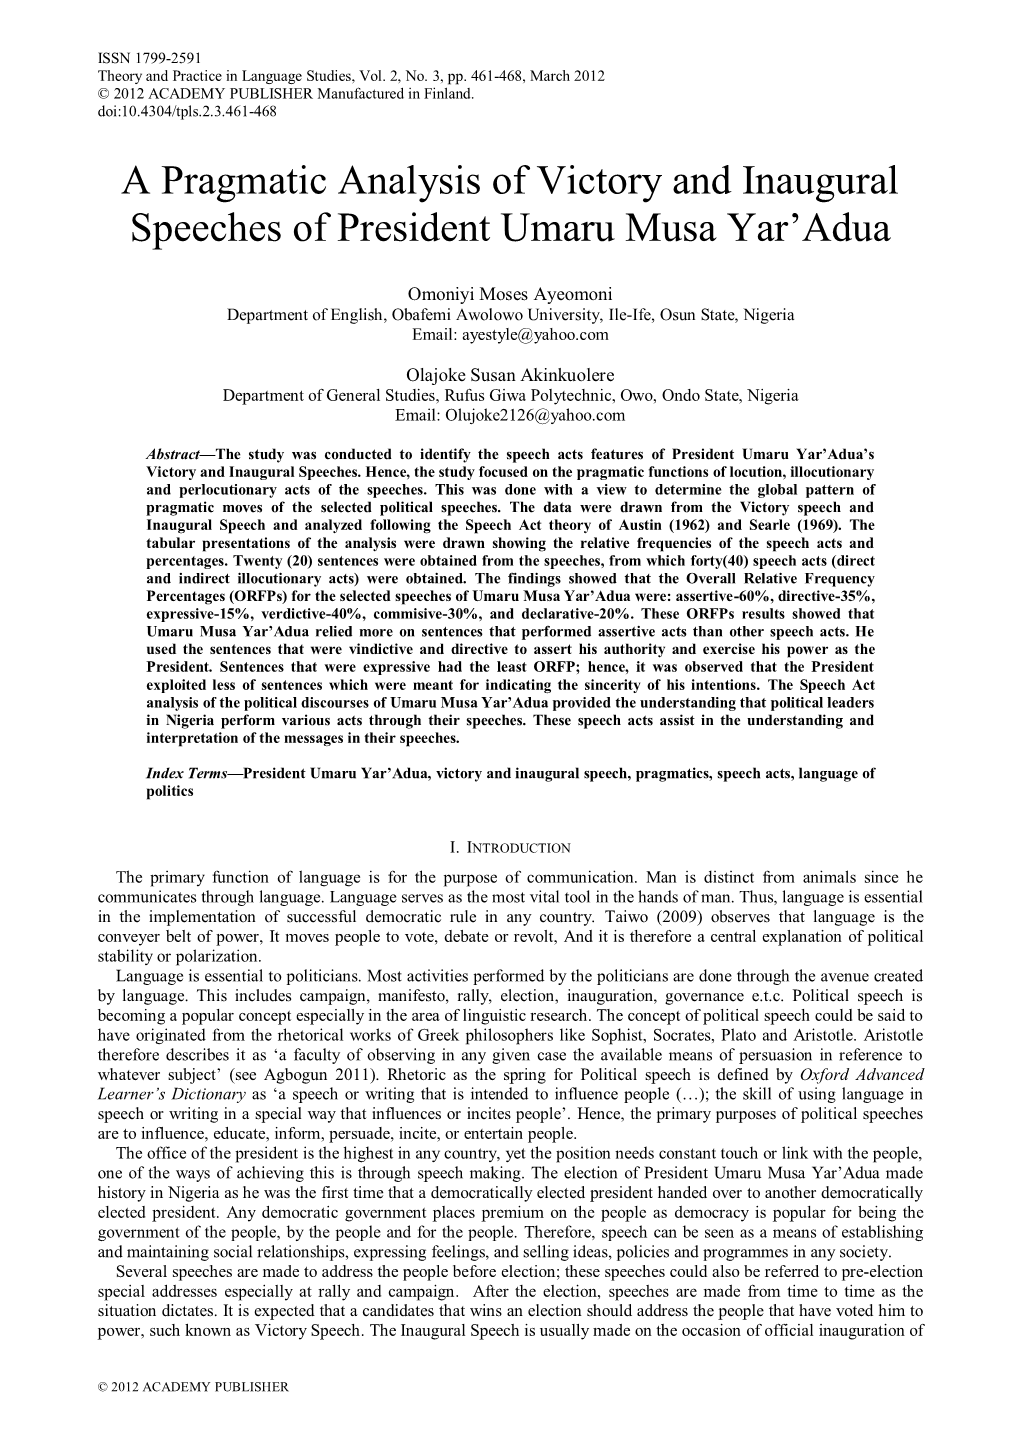 A Pragmatic Analysis of Victory and Inaugural Speeches of President Umaru Musa Yar‟Adua